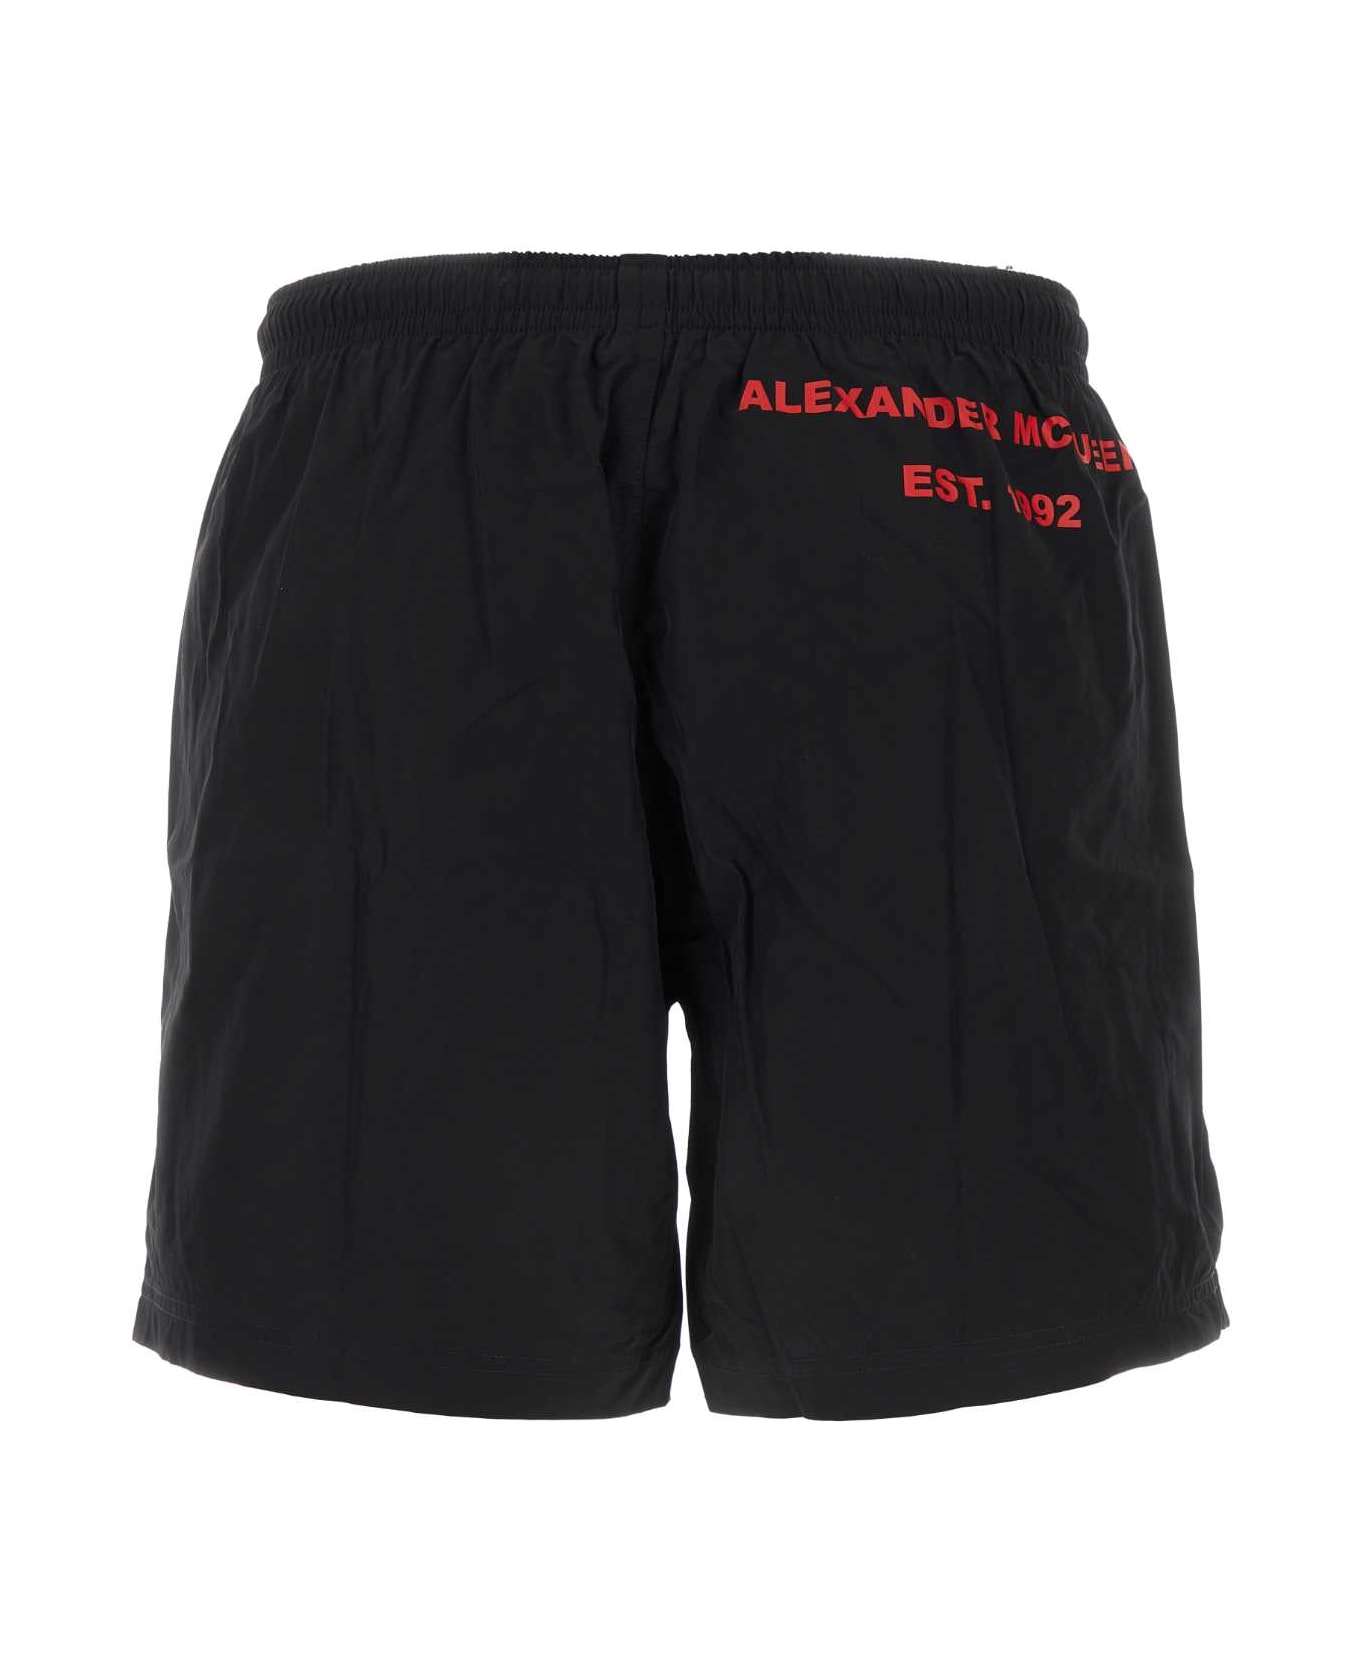 Alexander McQueen Black Nylon Swimming Shorts - BLACKLUSTRED